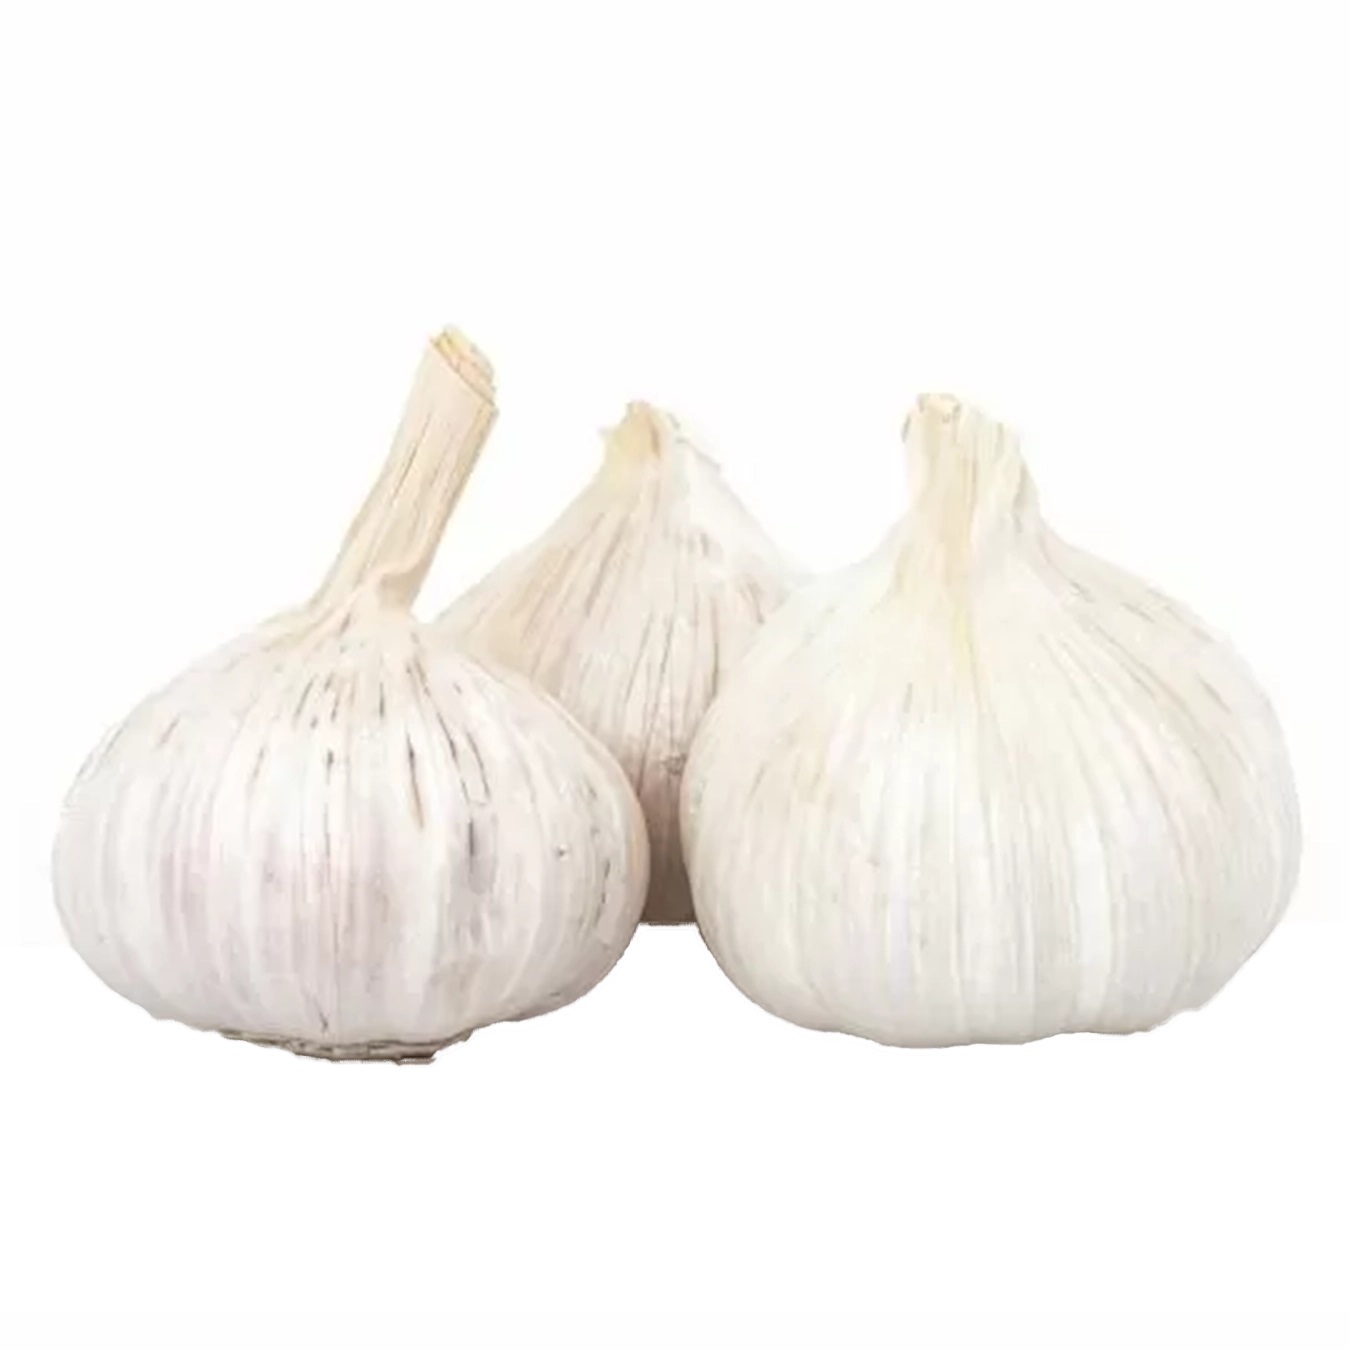 Garlic 3 pcs